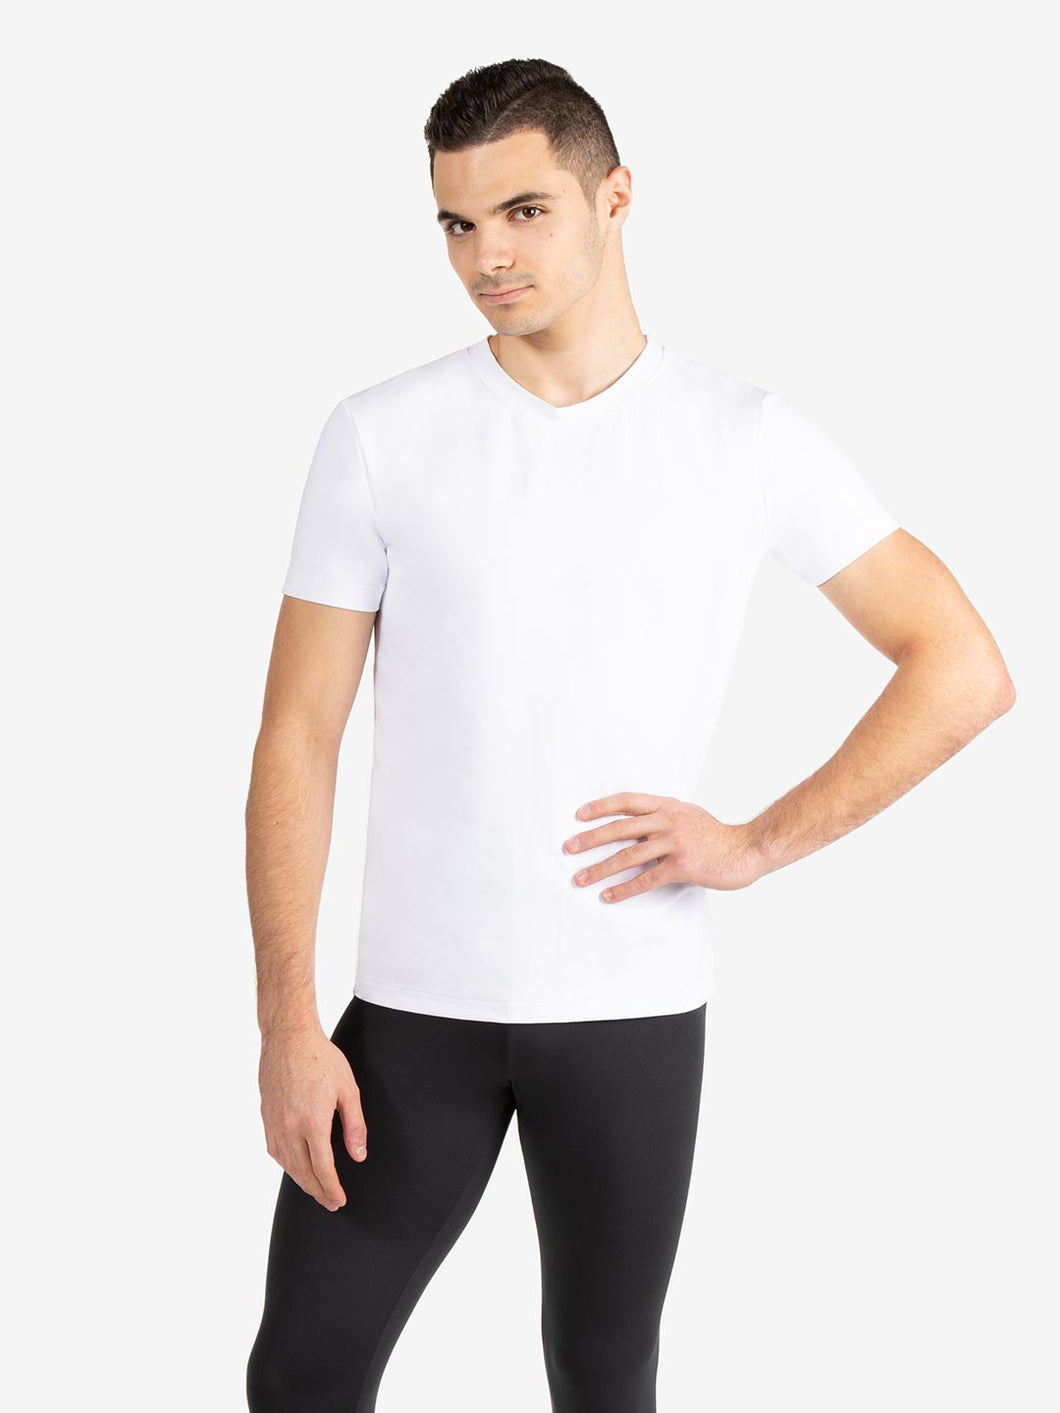 Capezio Boys White Short Sleeve Shirt #1061B